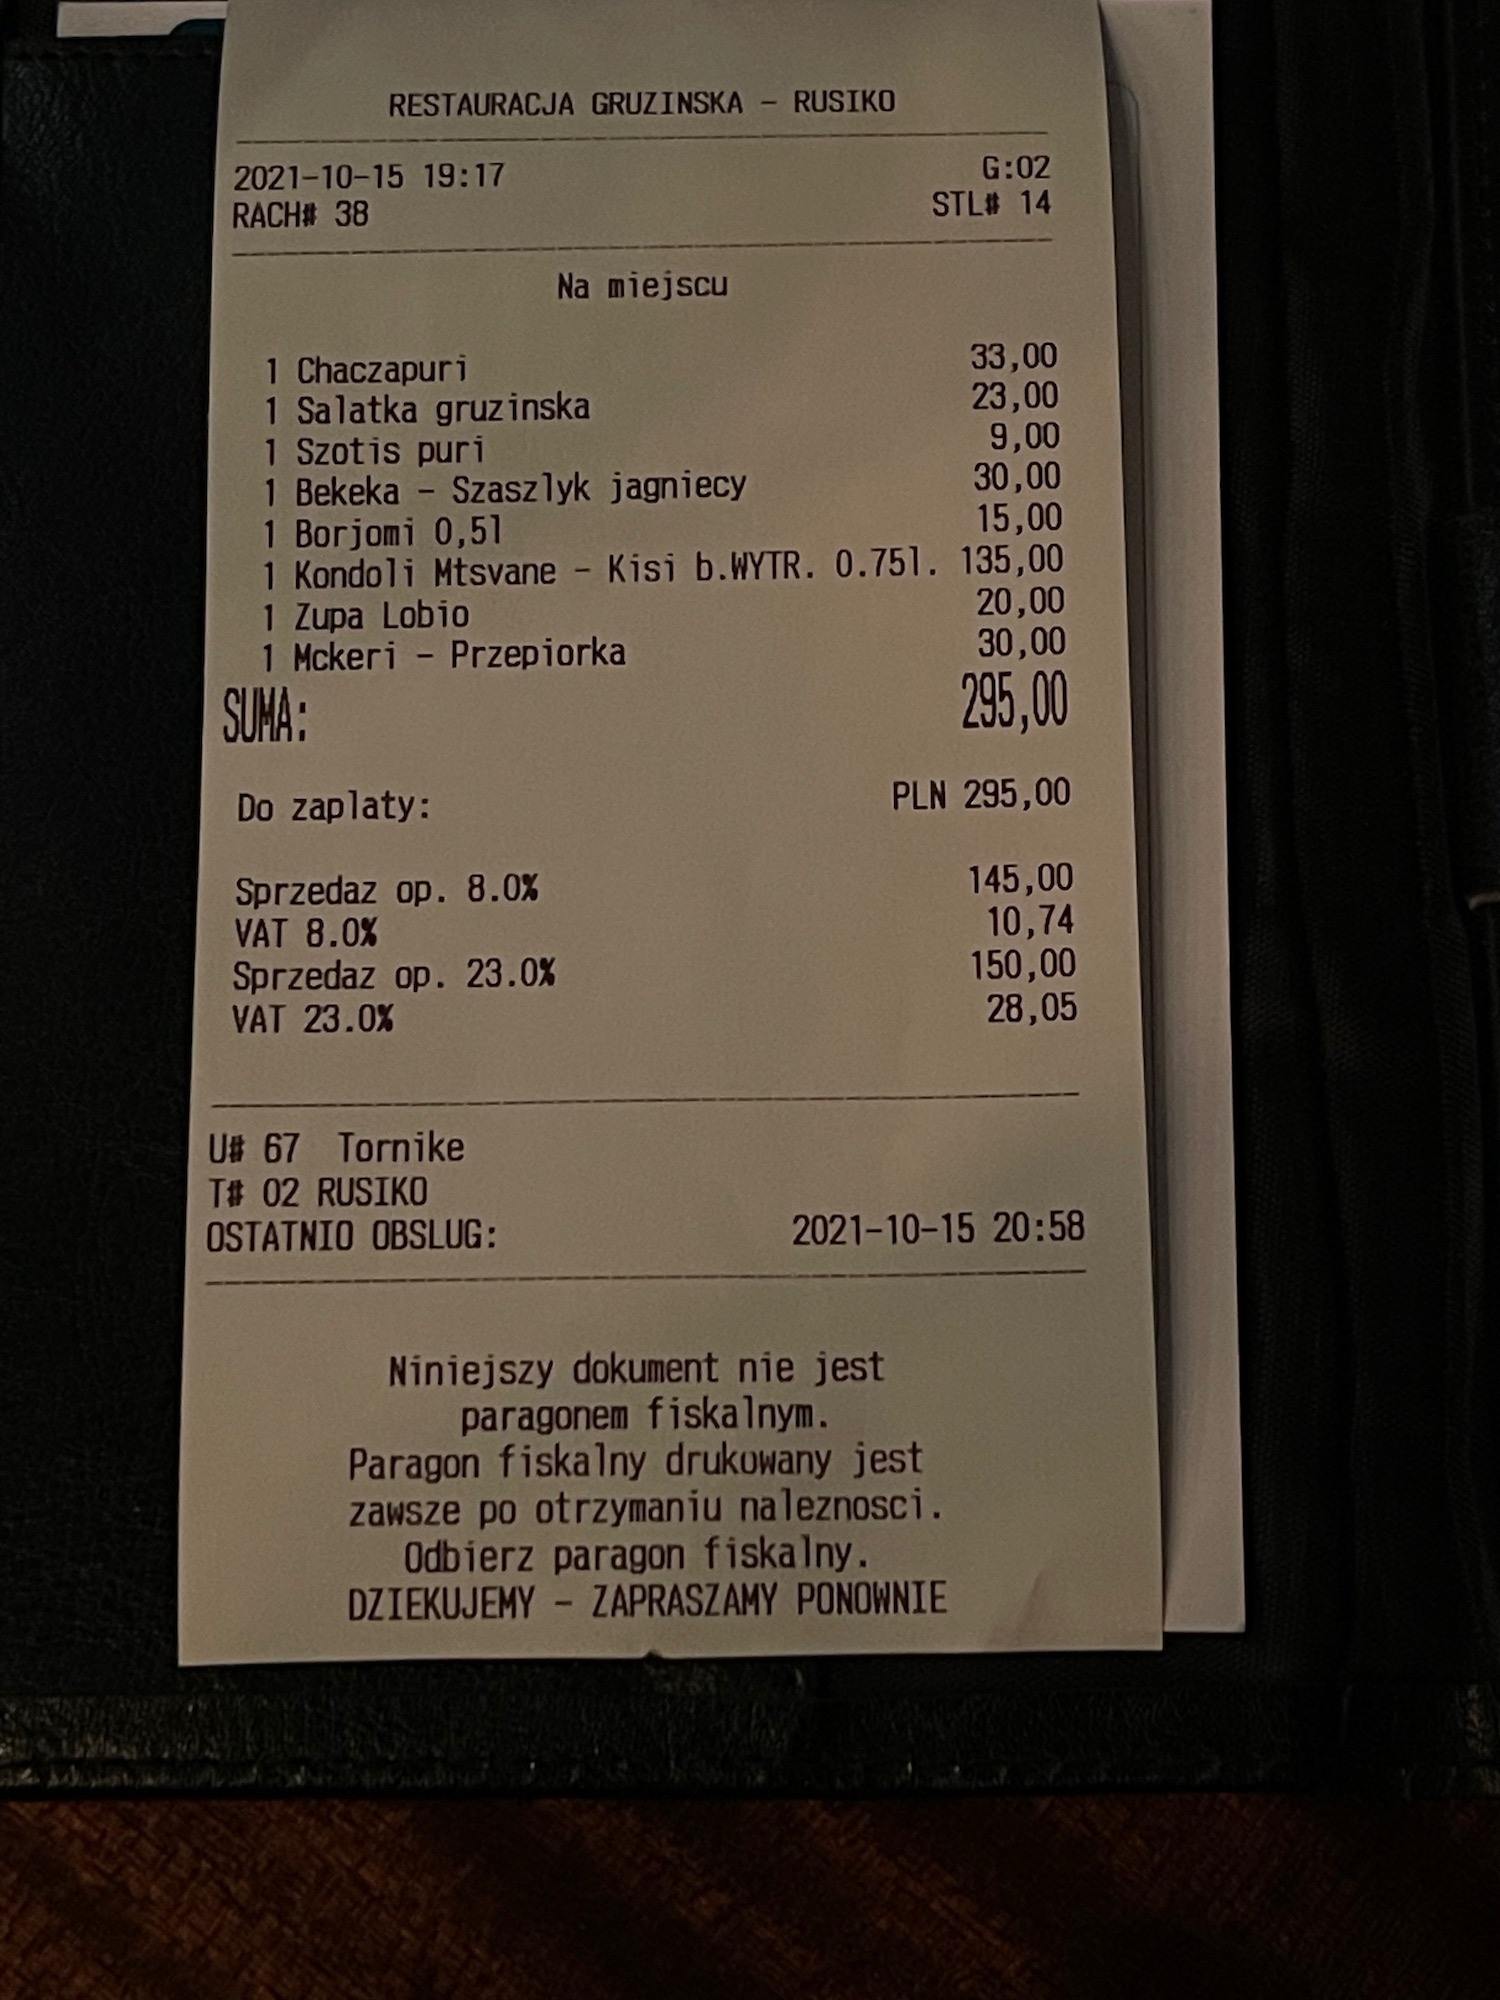 a receipt on a black surface